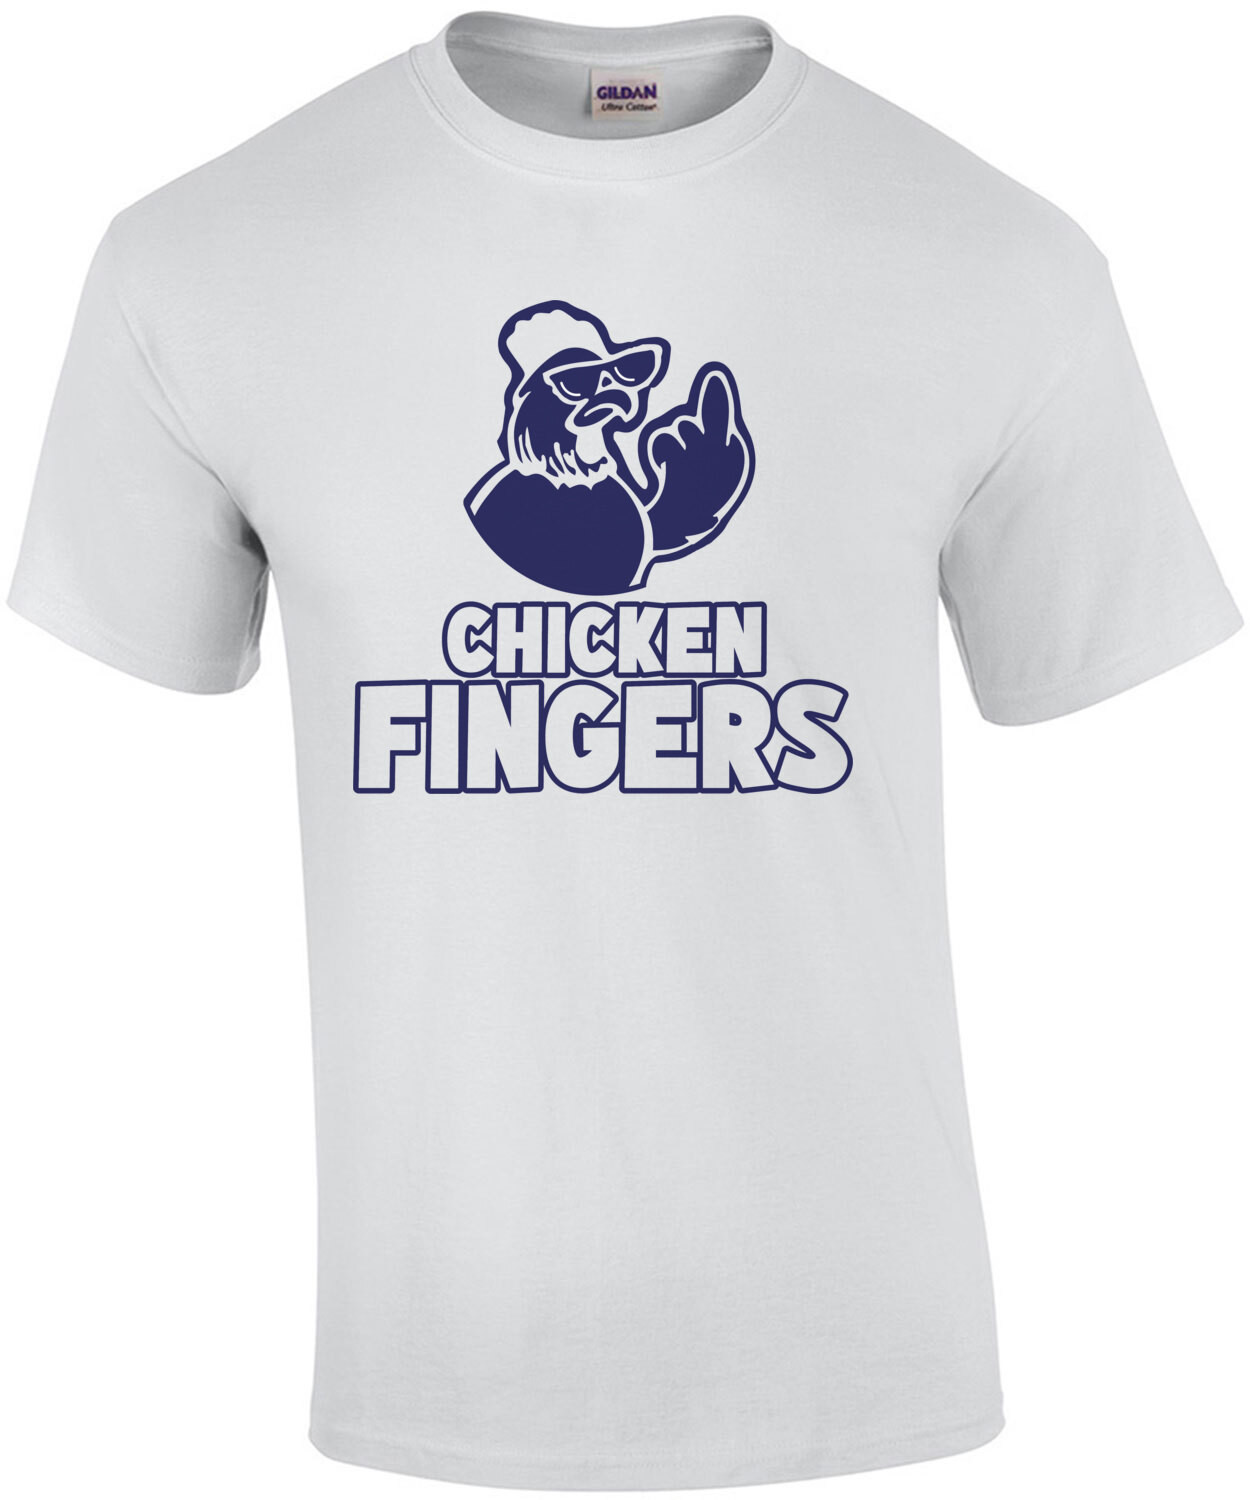 Chicken Fingers - Funny chicken pun t-shirt